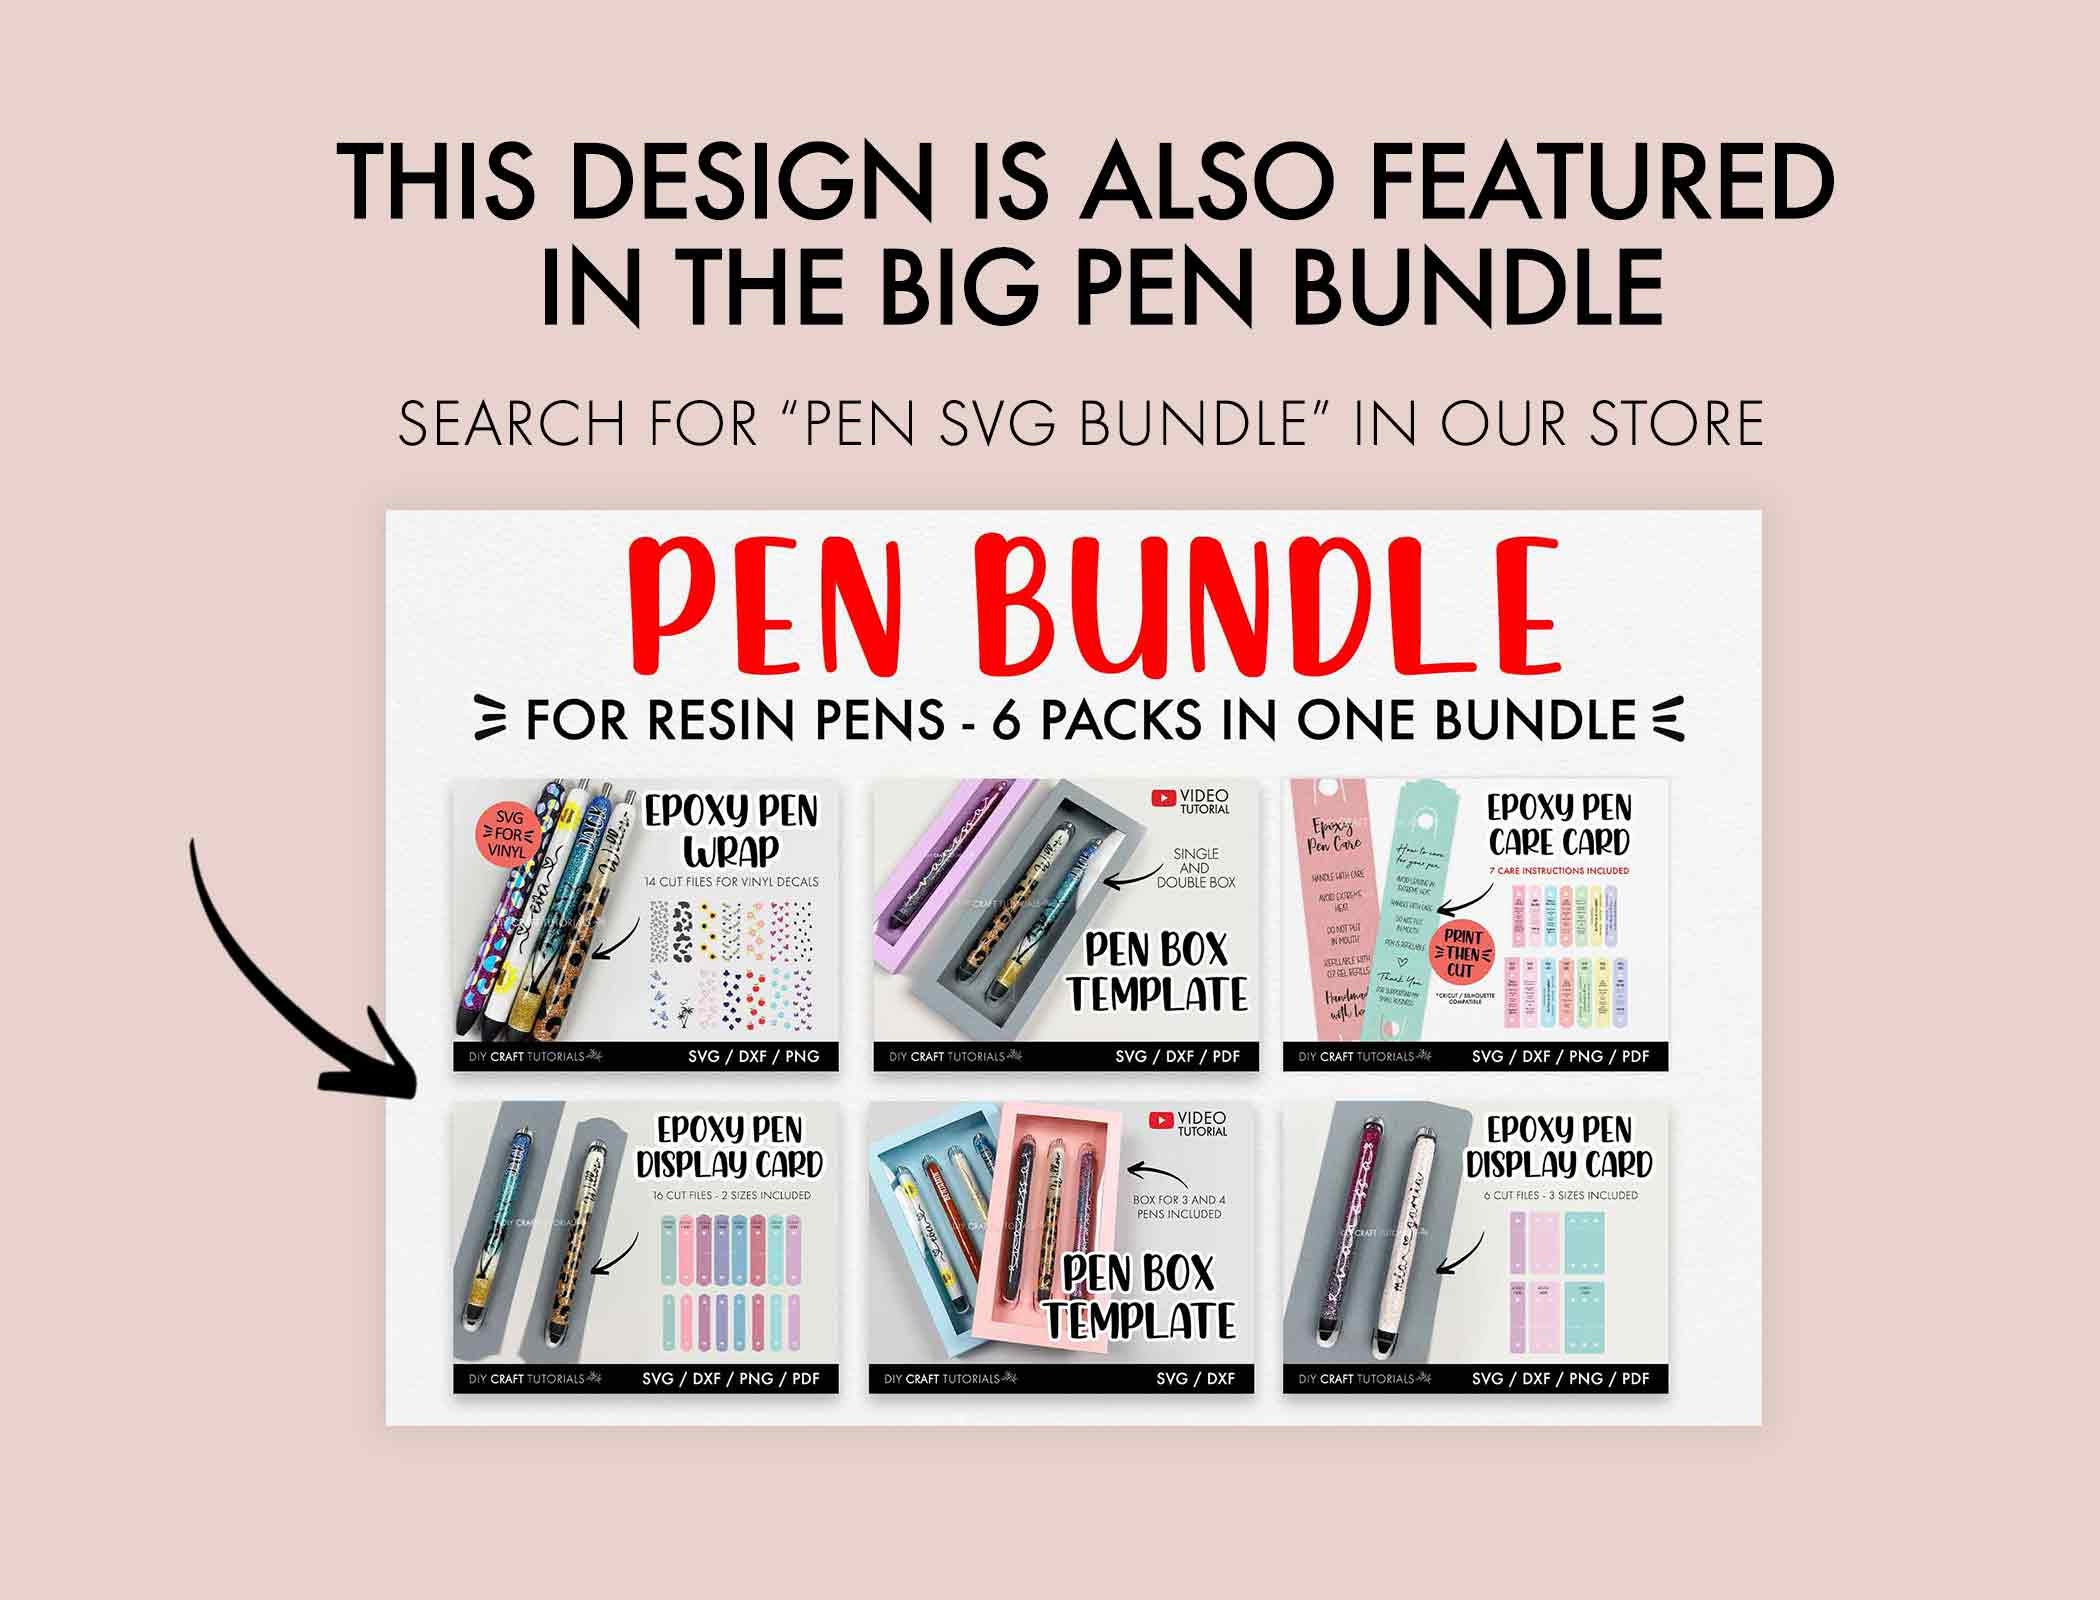 Pen Wrap SVG – DIY Craft Tutorials